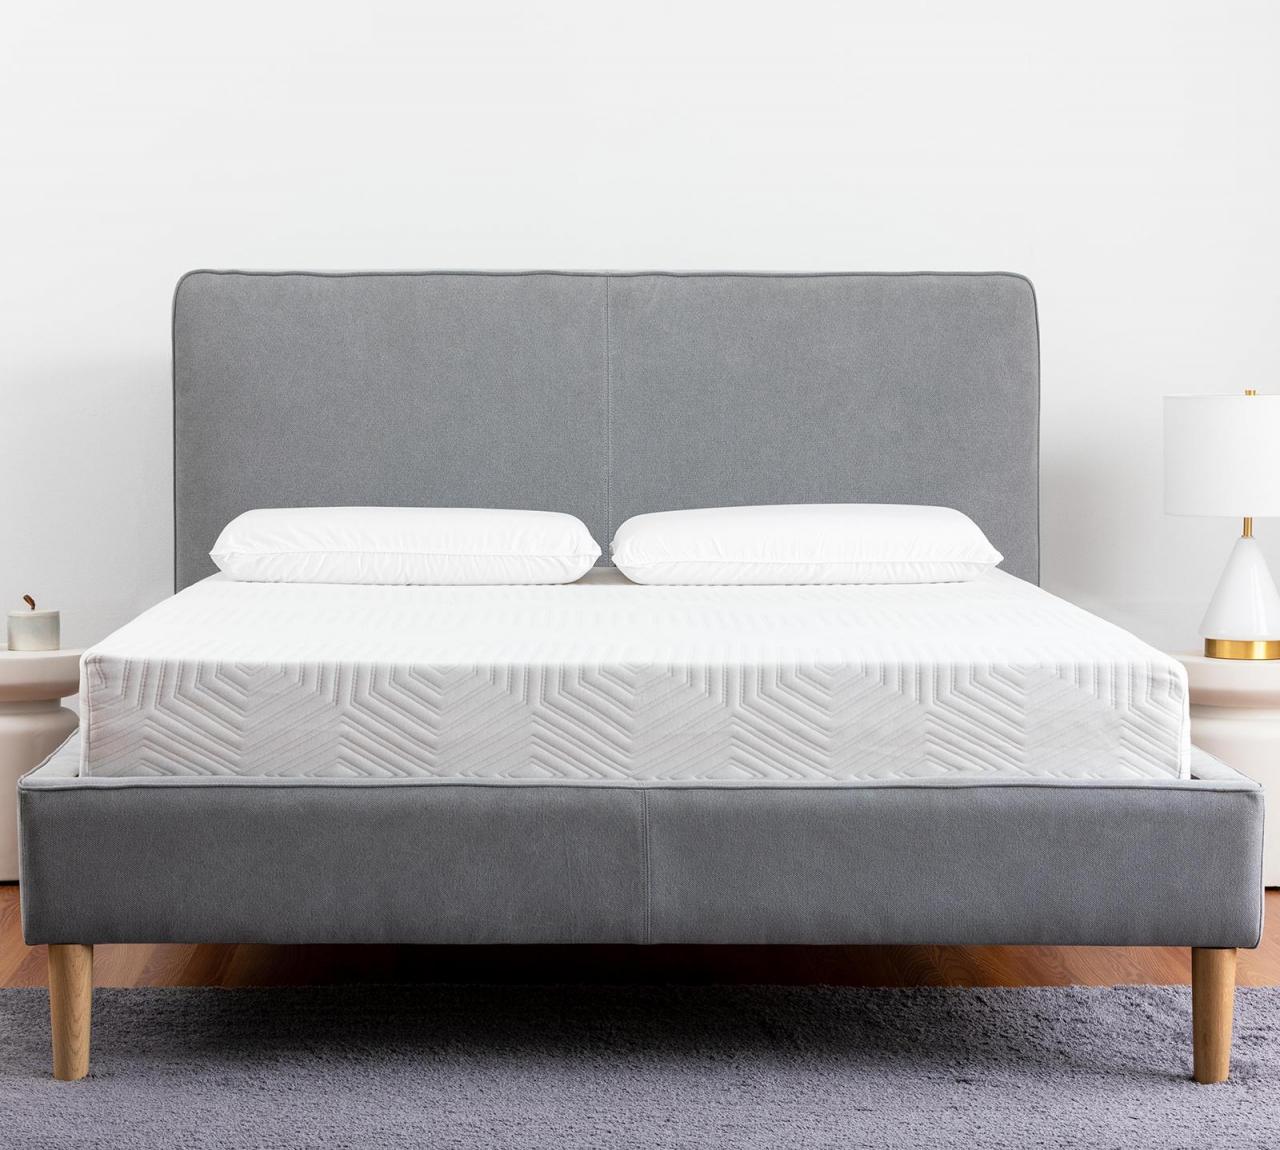 Best RV Mattress Options for a Comfortable Sleep - Bob Vila